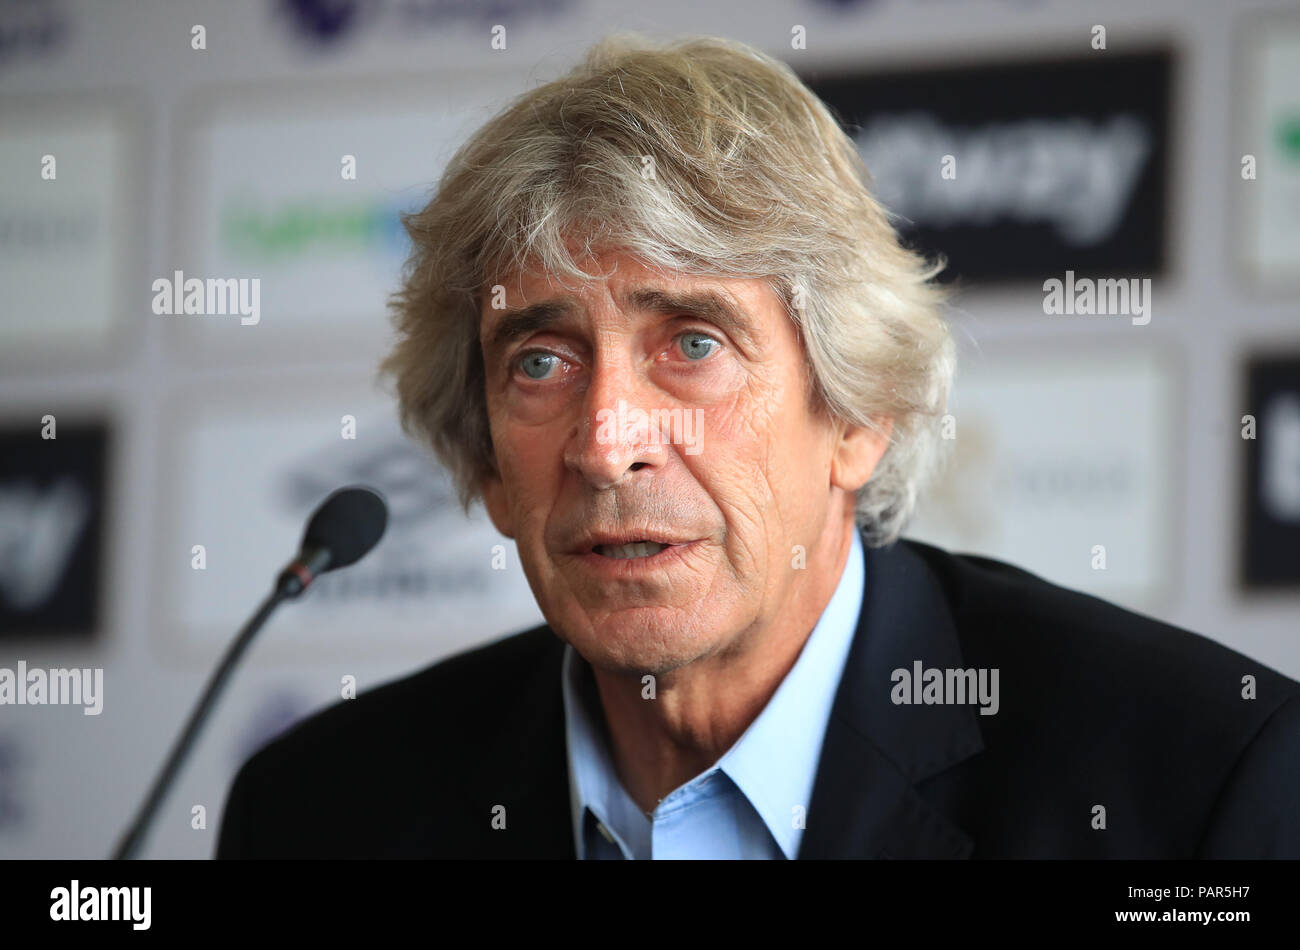 West Ham manager Manuel Pellegrini durante una conferenza stampa presso la London Stadium, Londra. Foto Stock